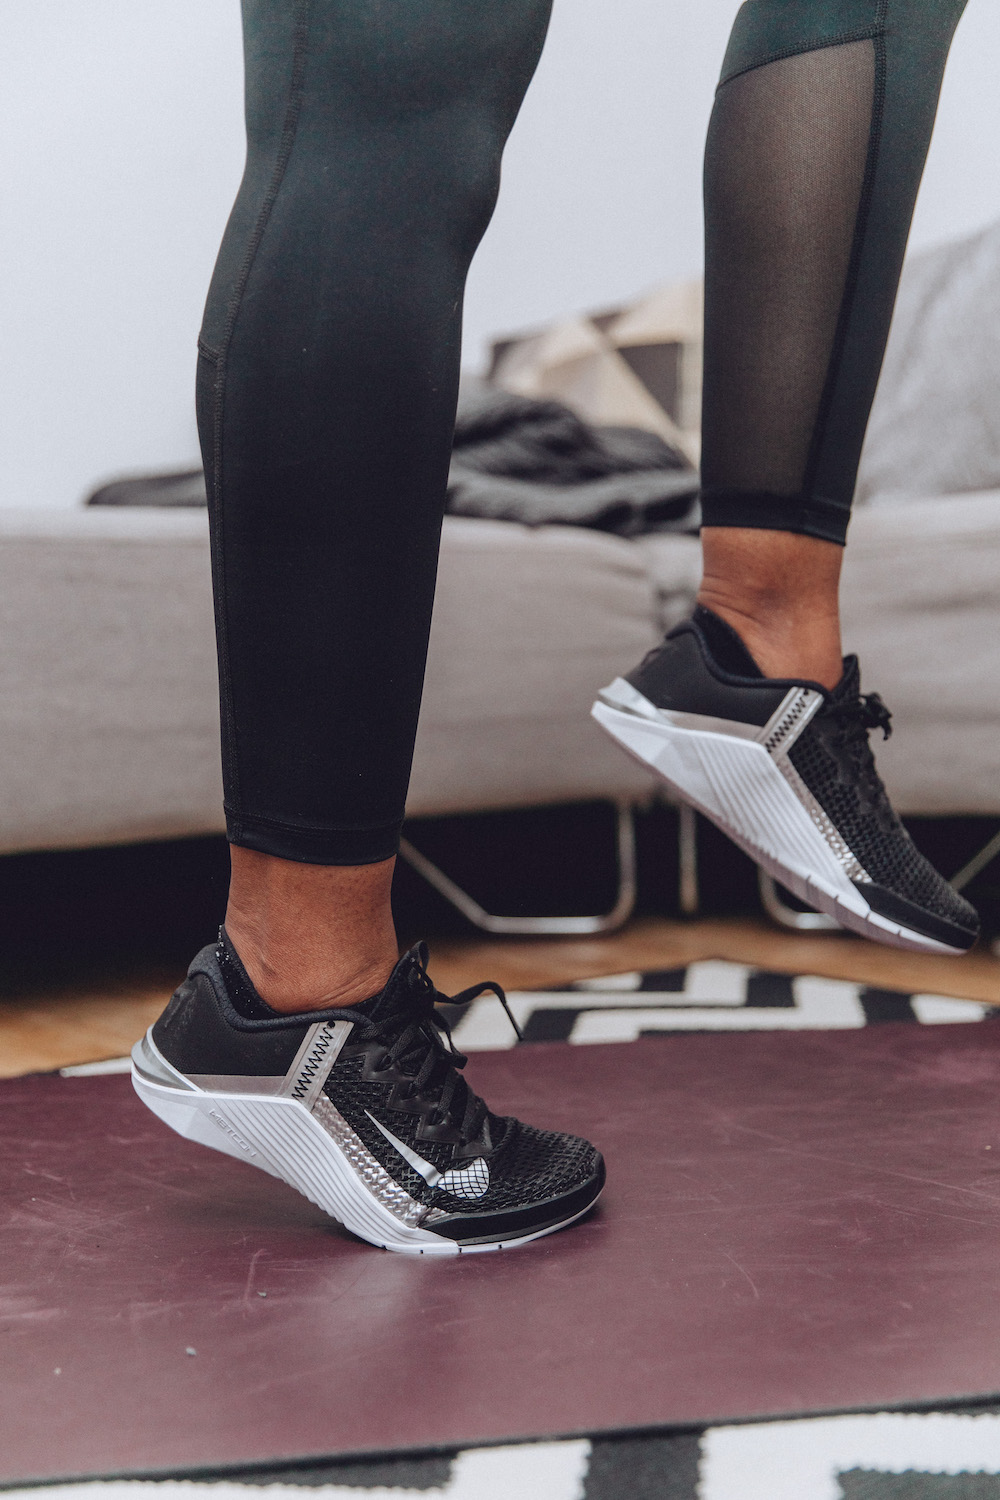 Nike Metcon 9 Premium Women's Cross Training Shoes Black Multi-color